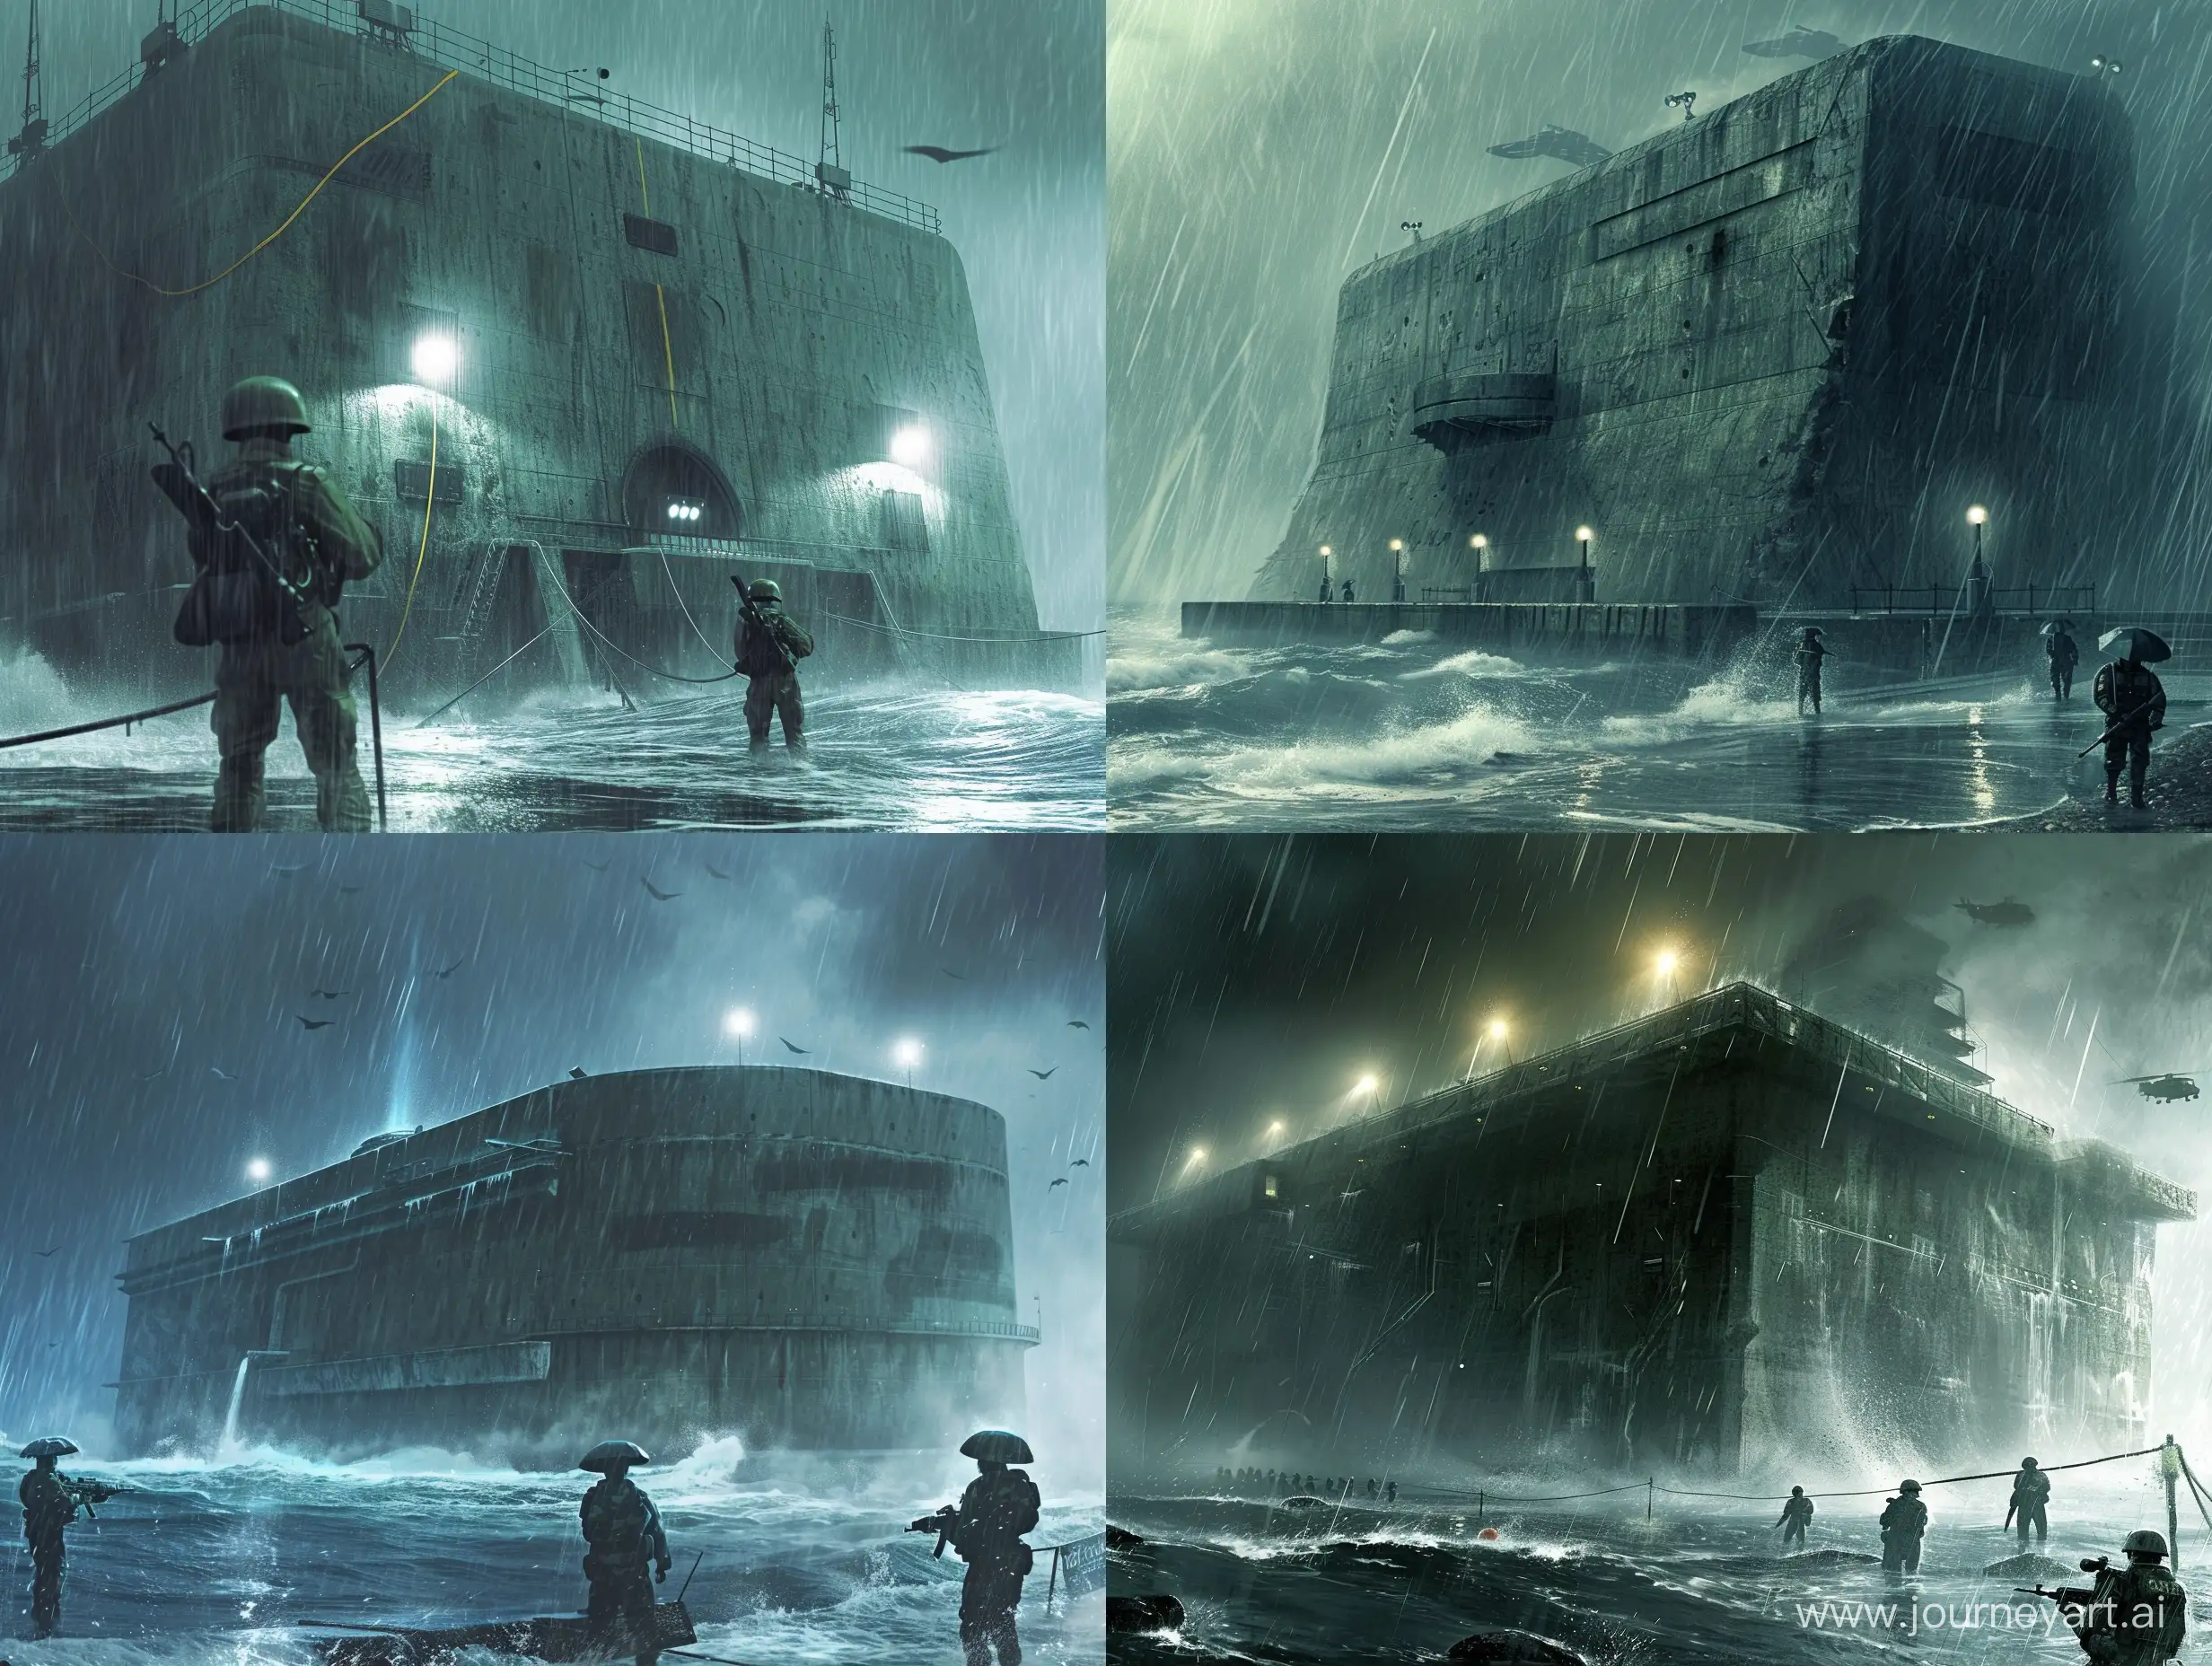 Mysterious-Retro-Futuristic-Oceanic-Cold-War-Era-Building